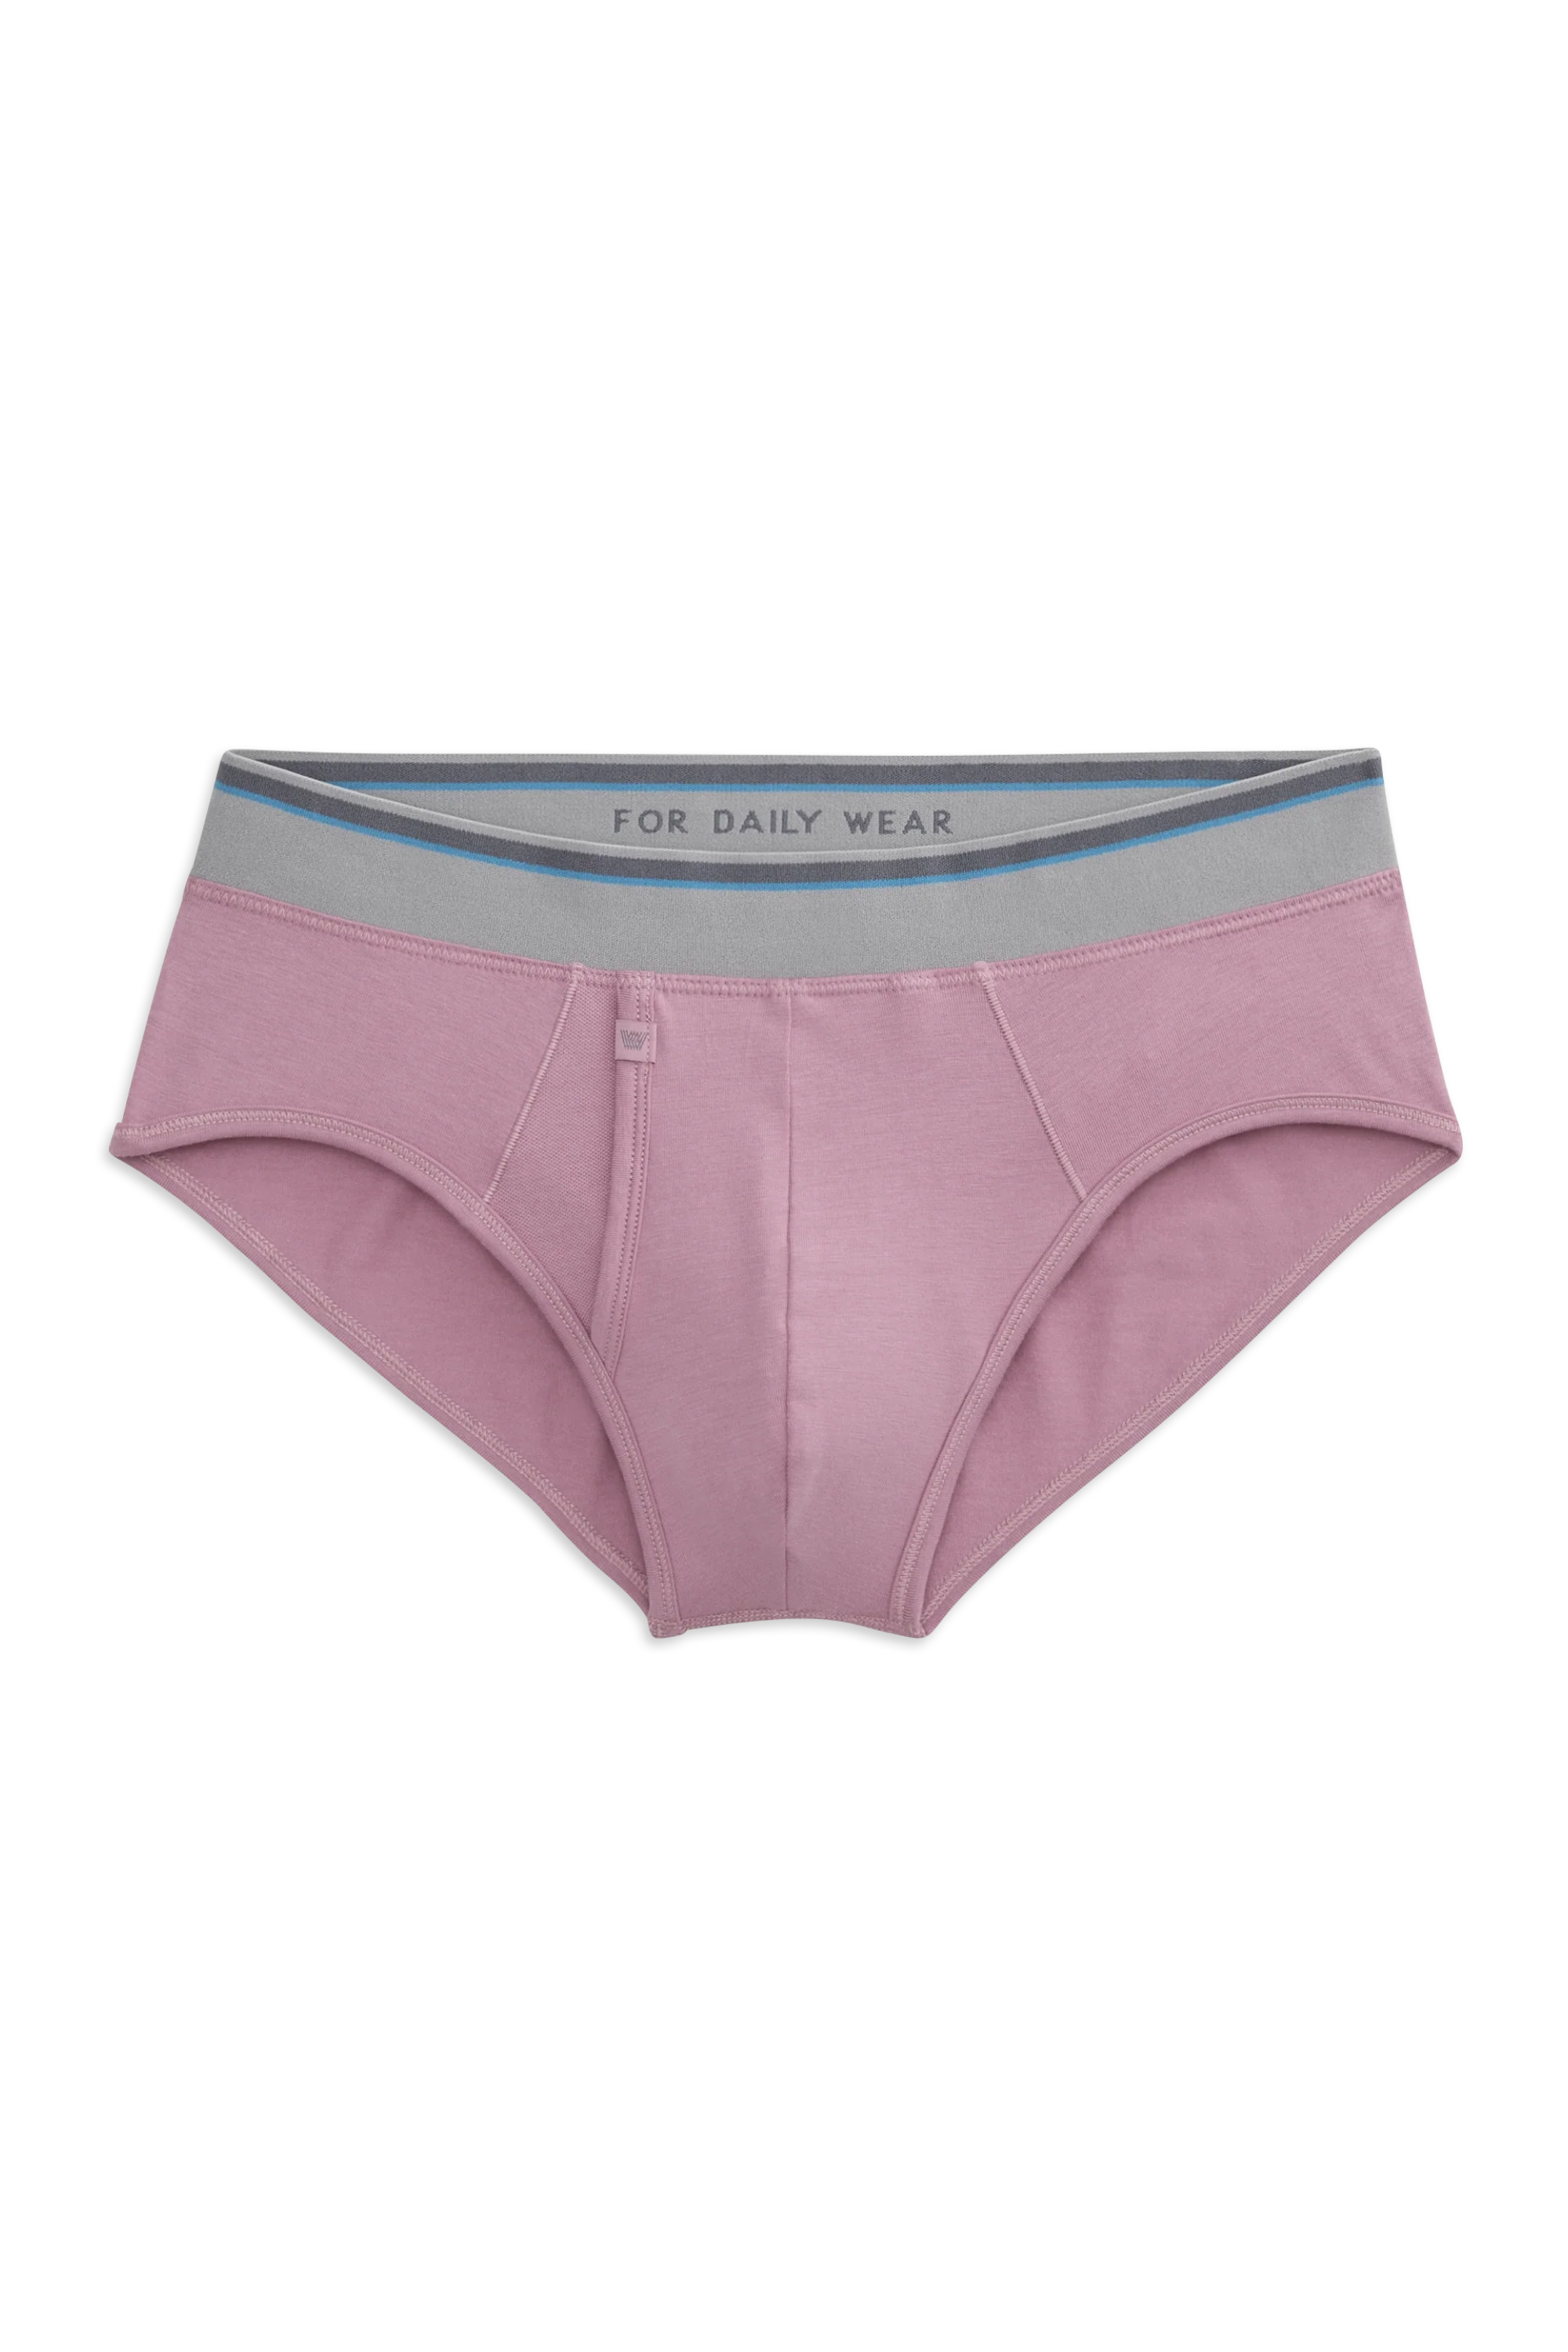 Mack Weldon Memorial Day Sale 2023: Take up to 35% Off Men's Underwear